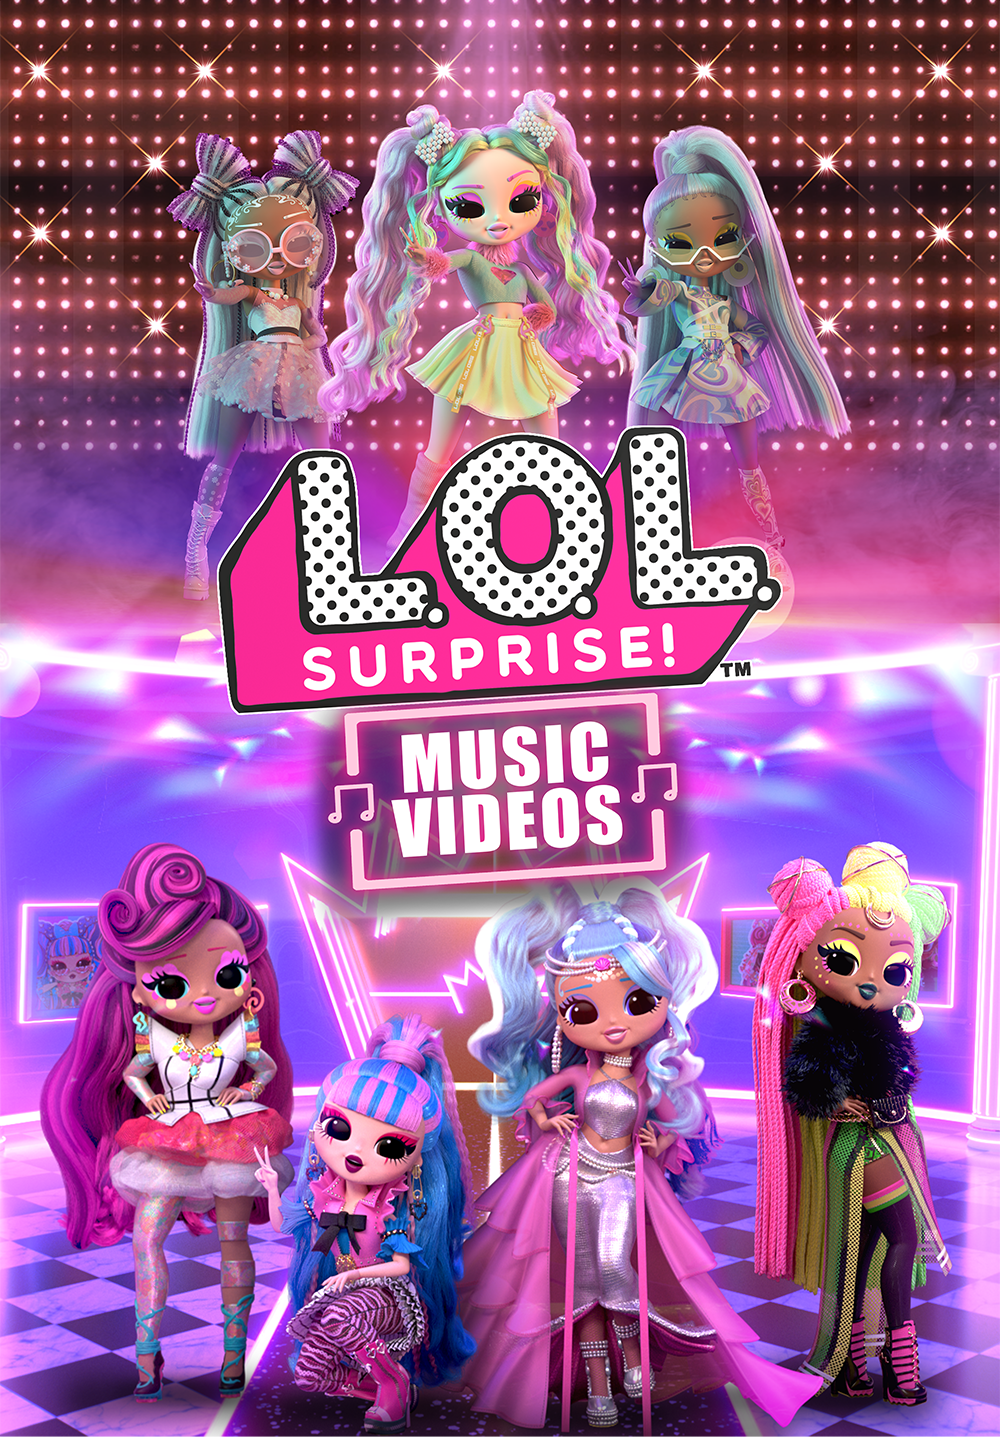 Lol-Music-Poster